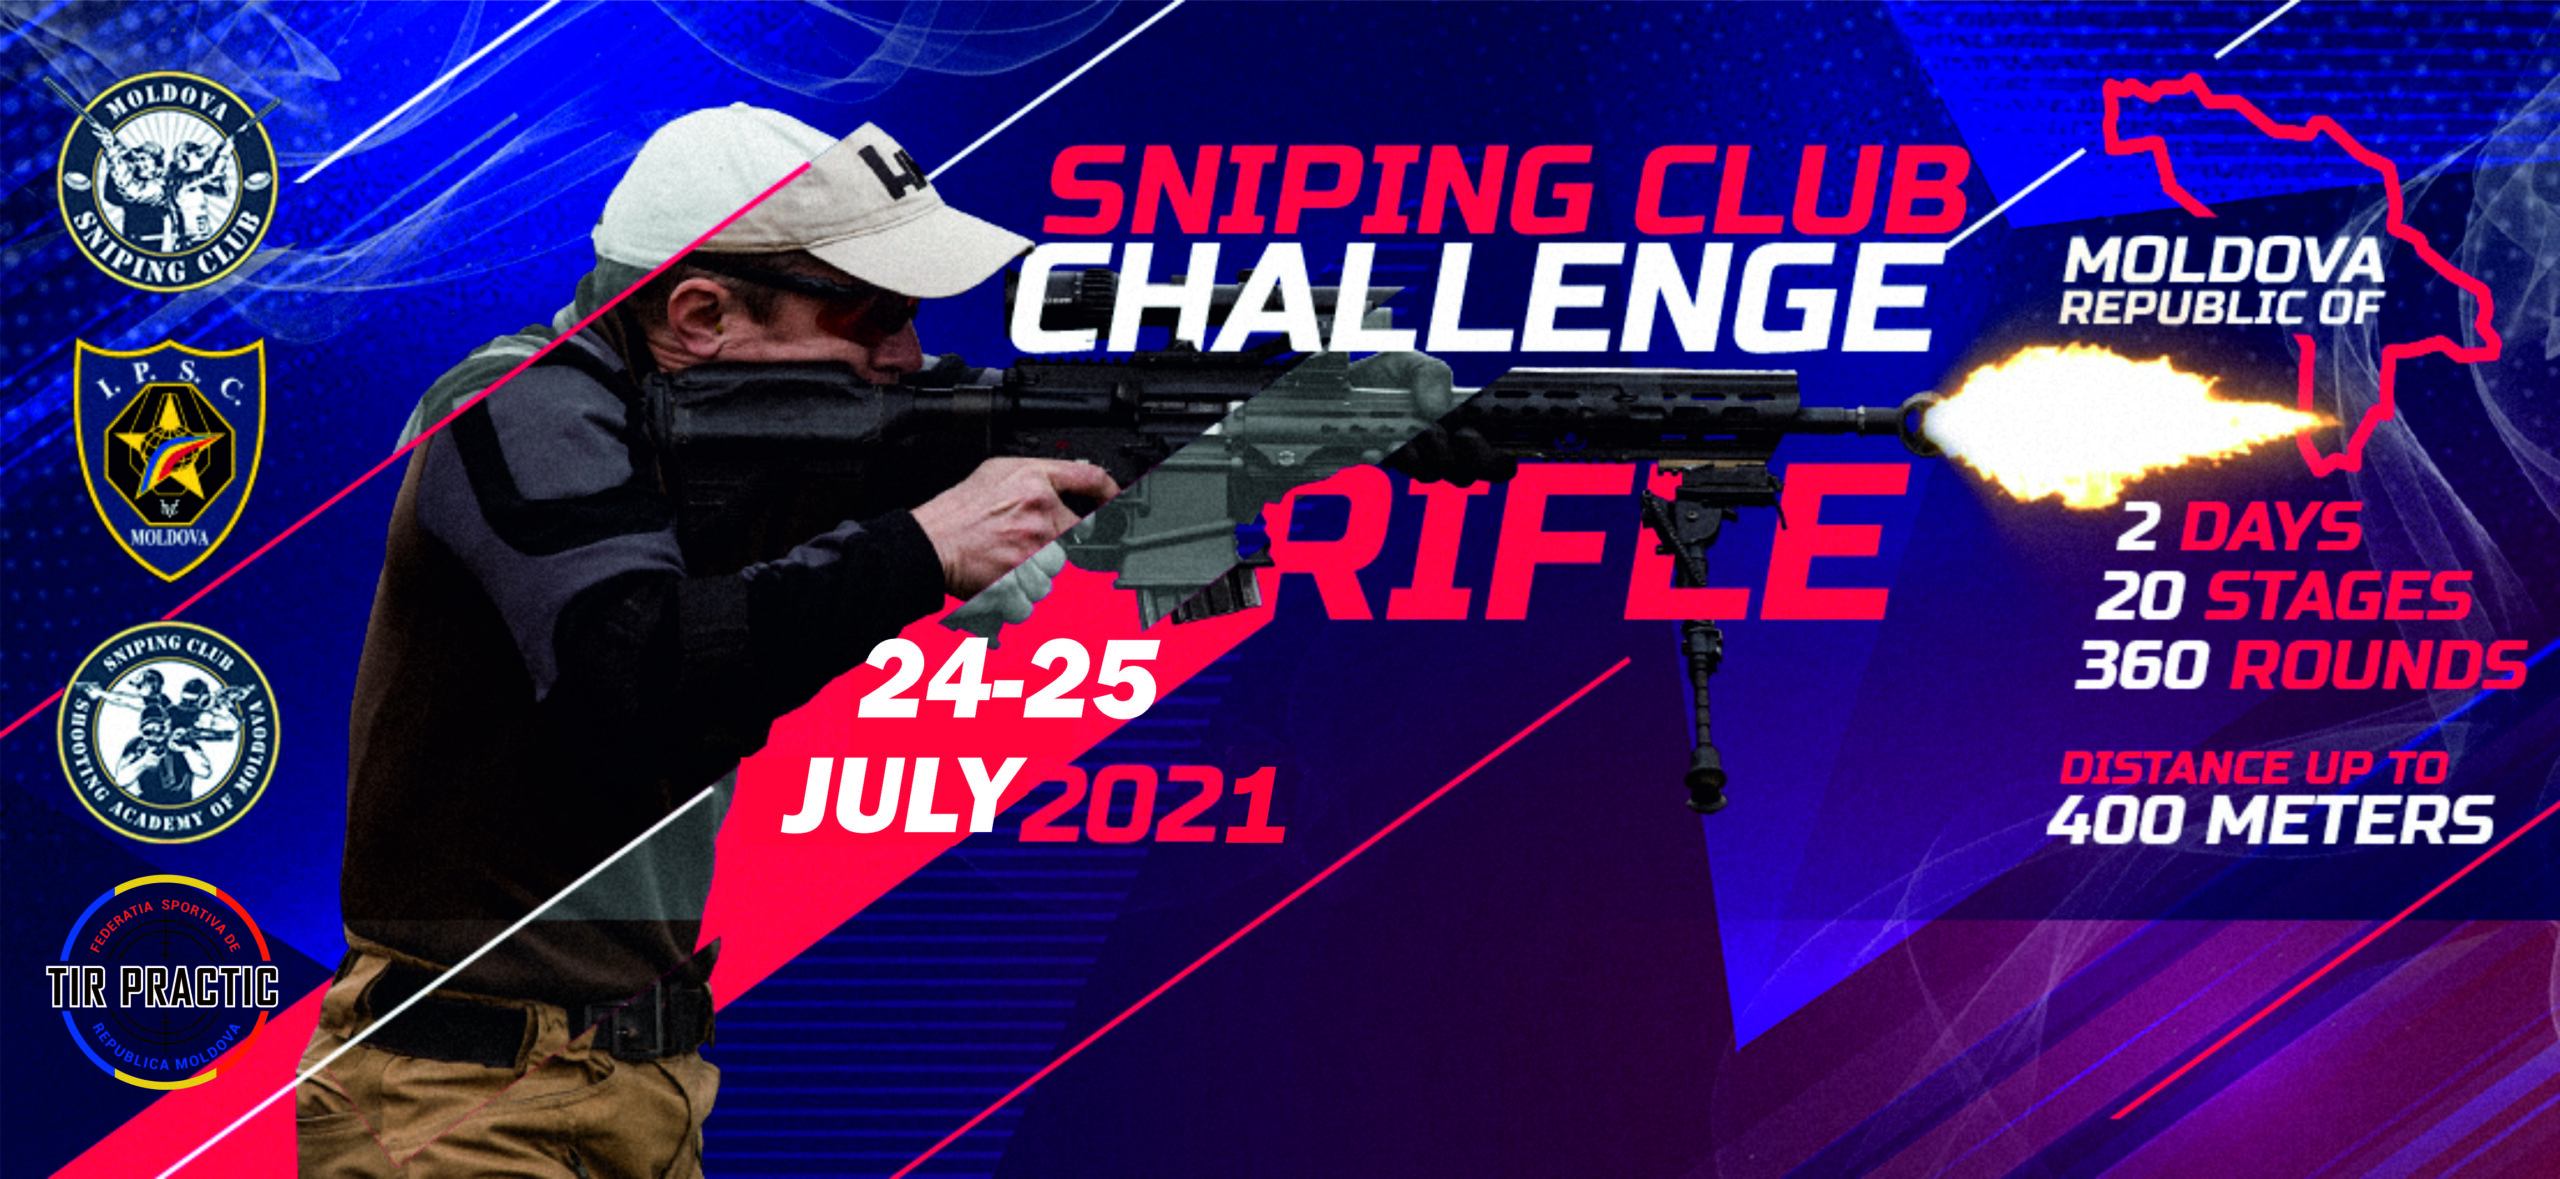 SnipingClub Challenge rifle